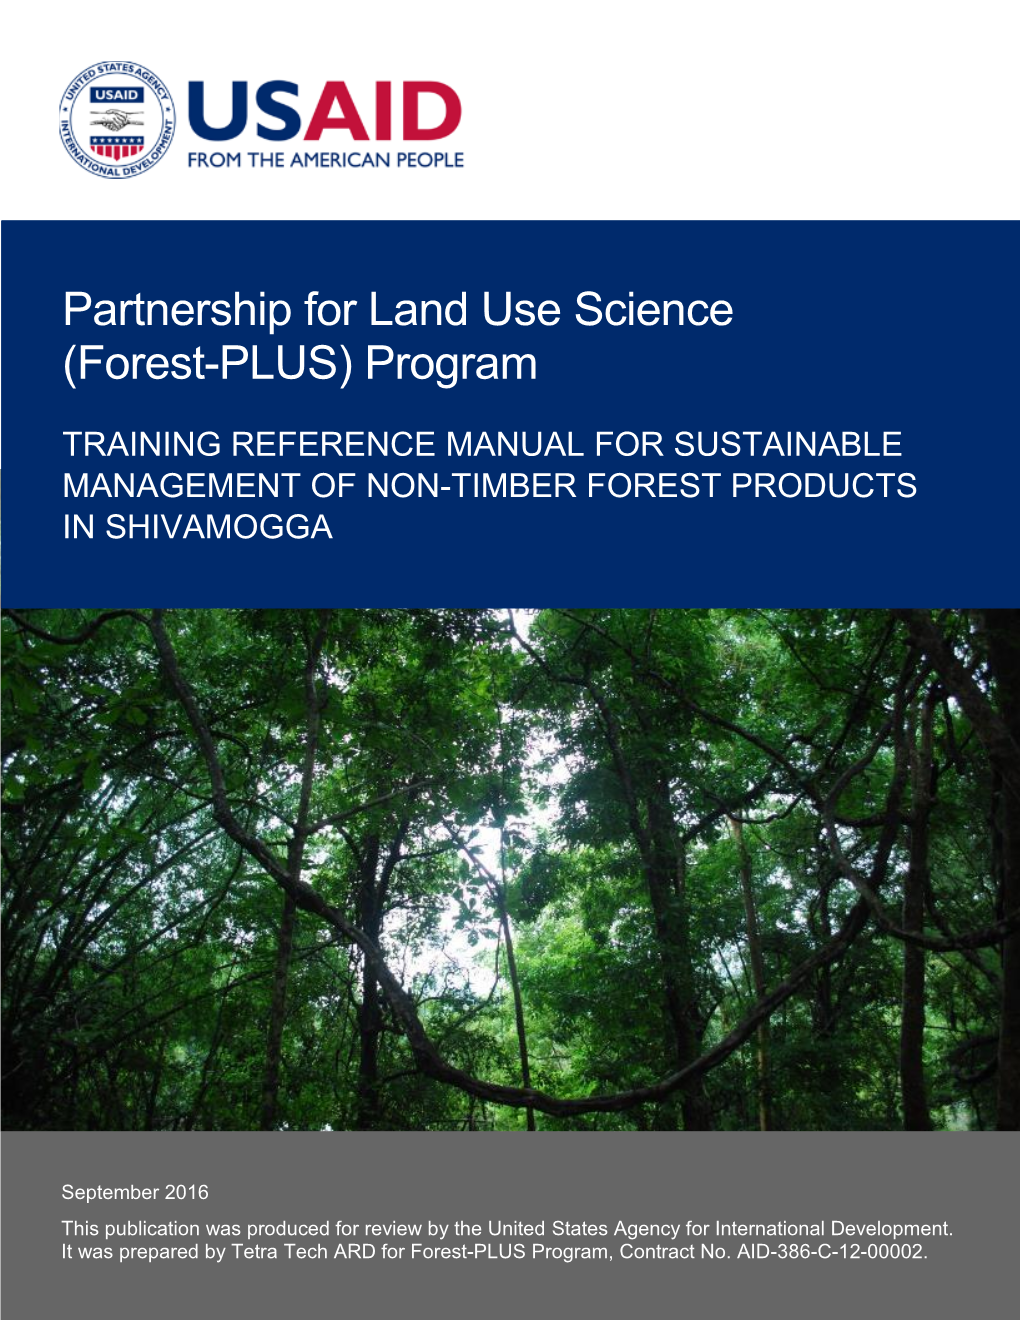 Forest-PLUS) Program